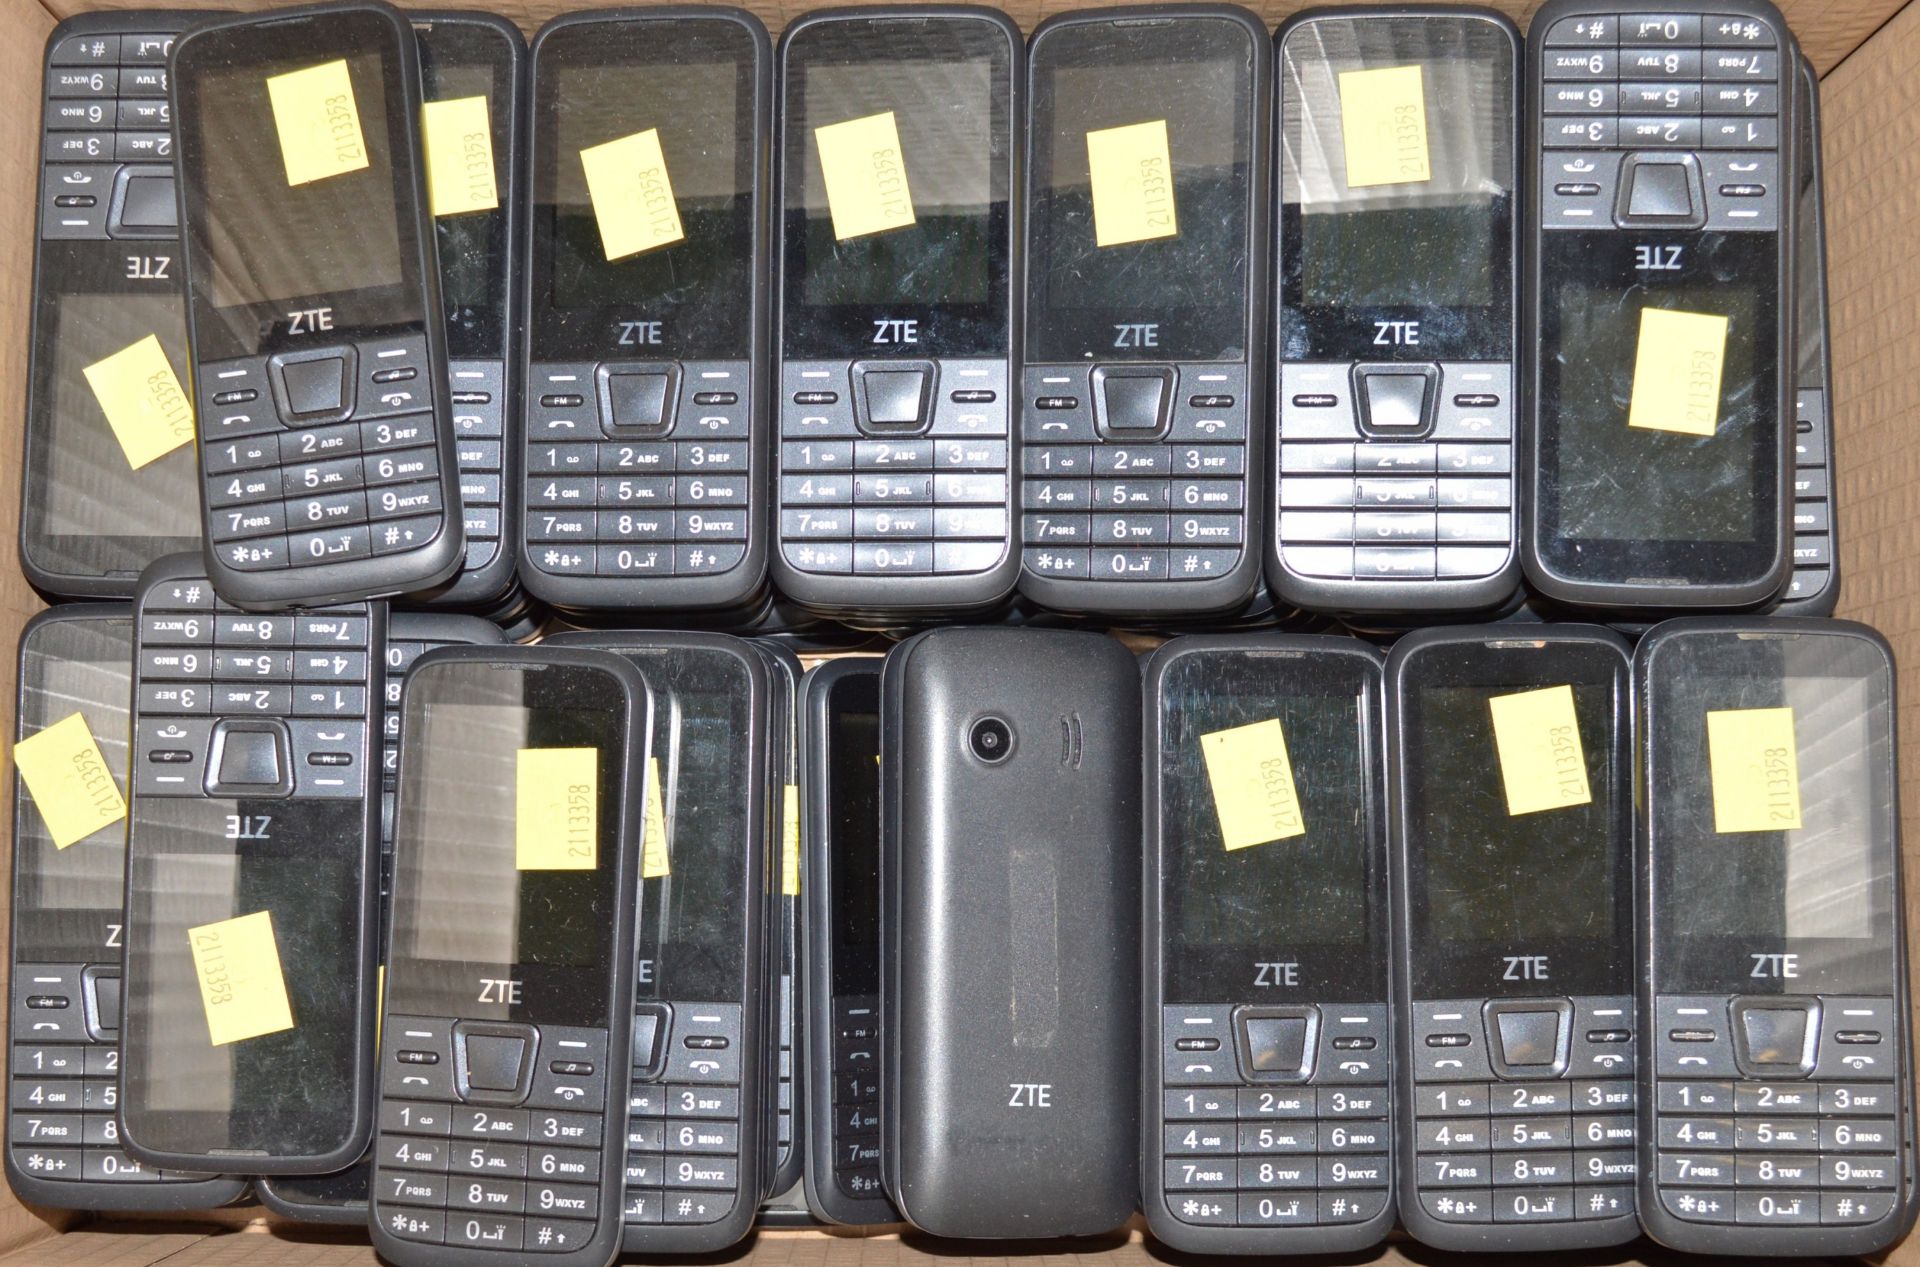 84x ZTE Mobile Phones.